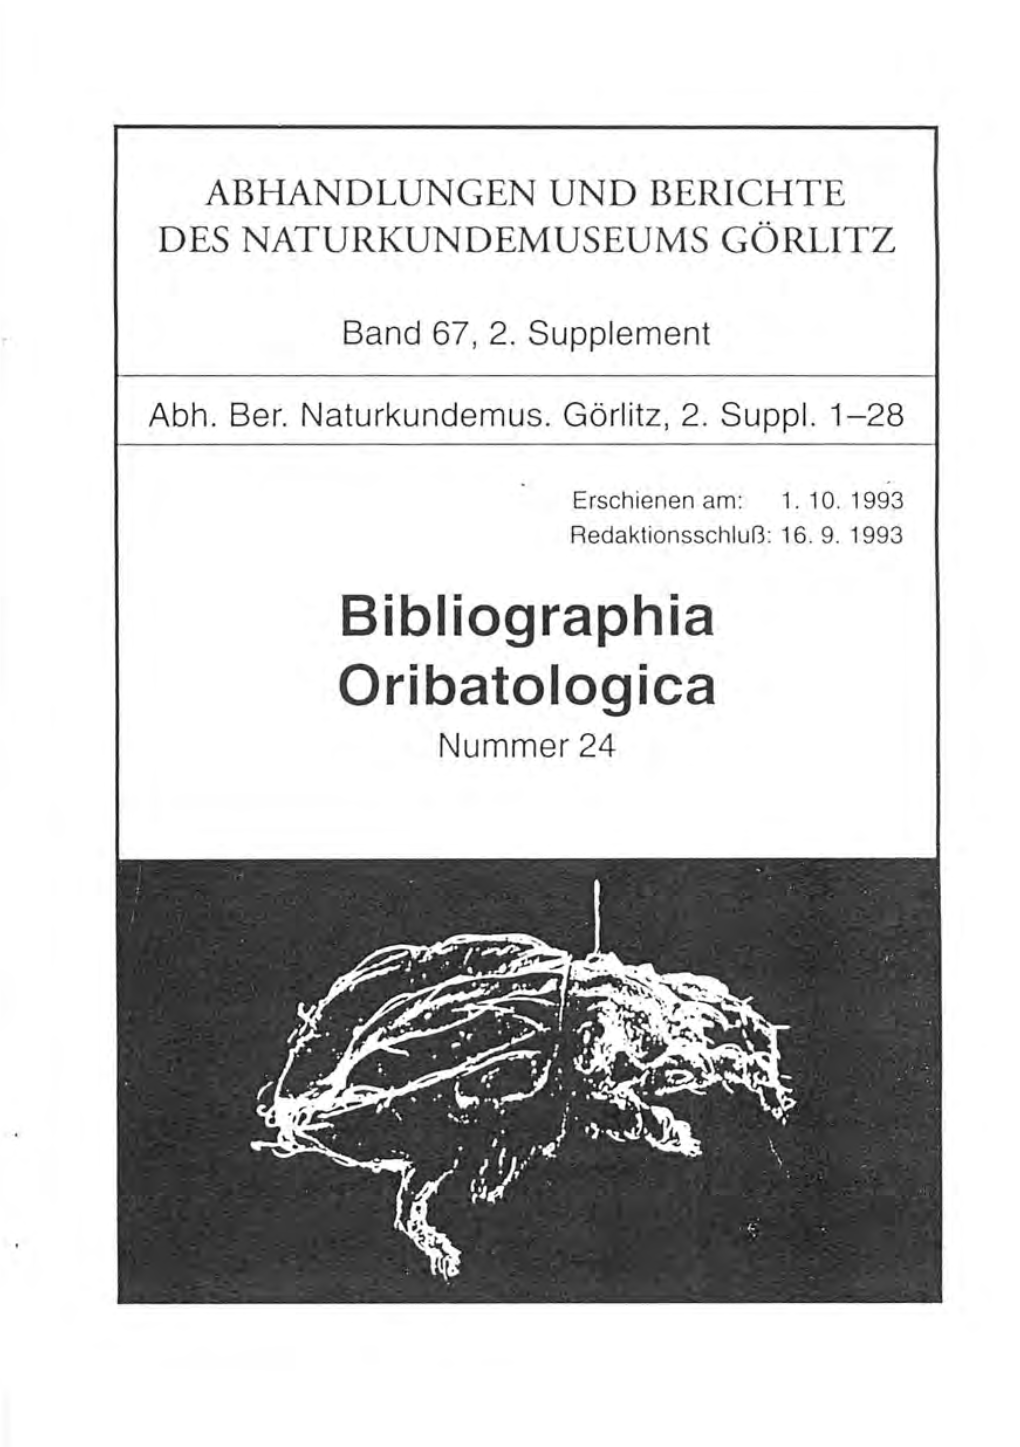 Bibliographia Oribatologica Nummer 24 Contents / Sommaire